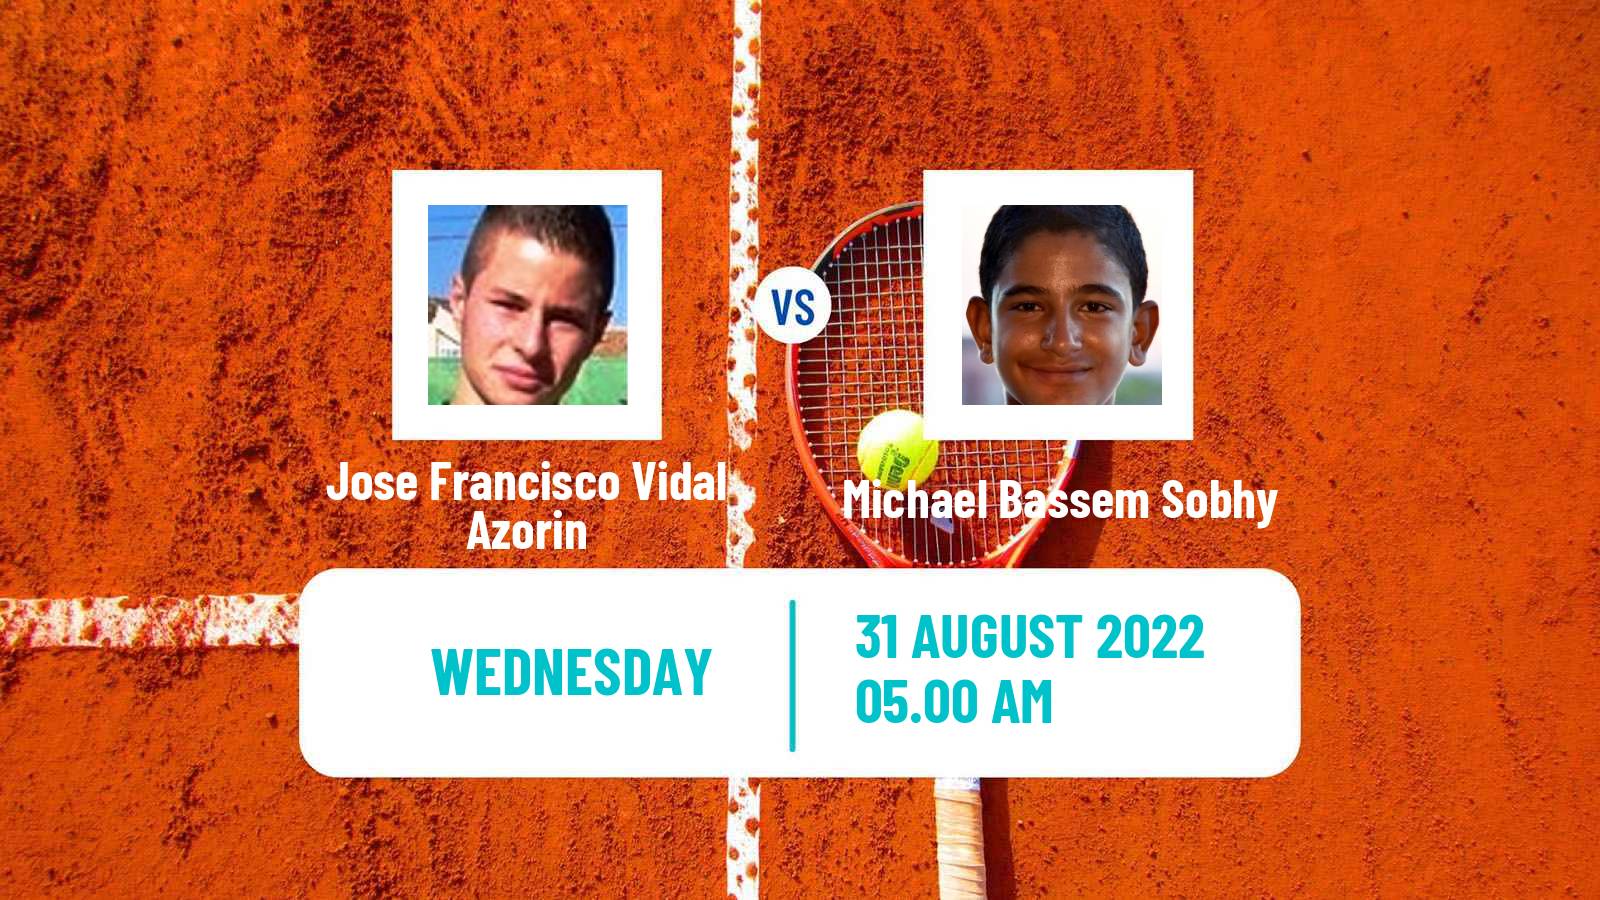 Tennis ITF Tournaments Jose Francisco Vidal Azorin - Michael Bassem Sobhy